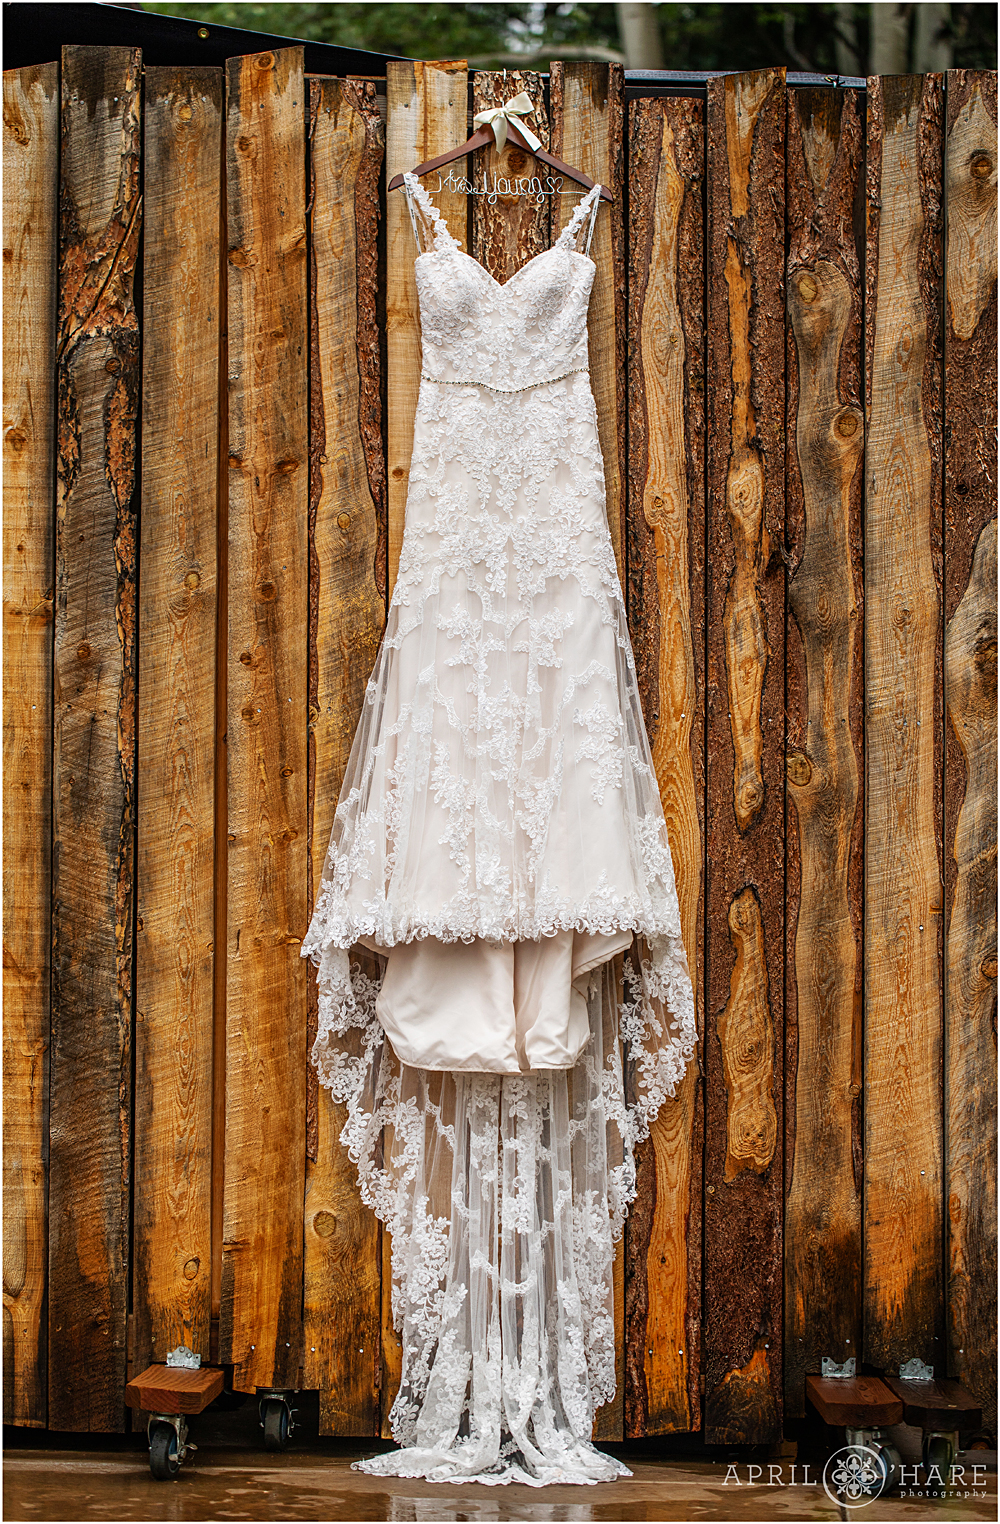 Pretty Lace Wedding Dress Hangs on Wood Wall at Blackstone Rivers Ranch in Idaho Springs